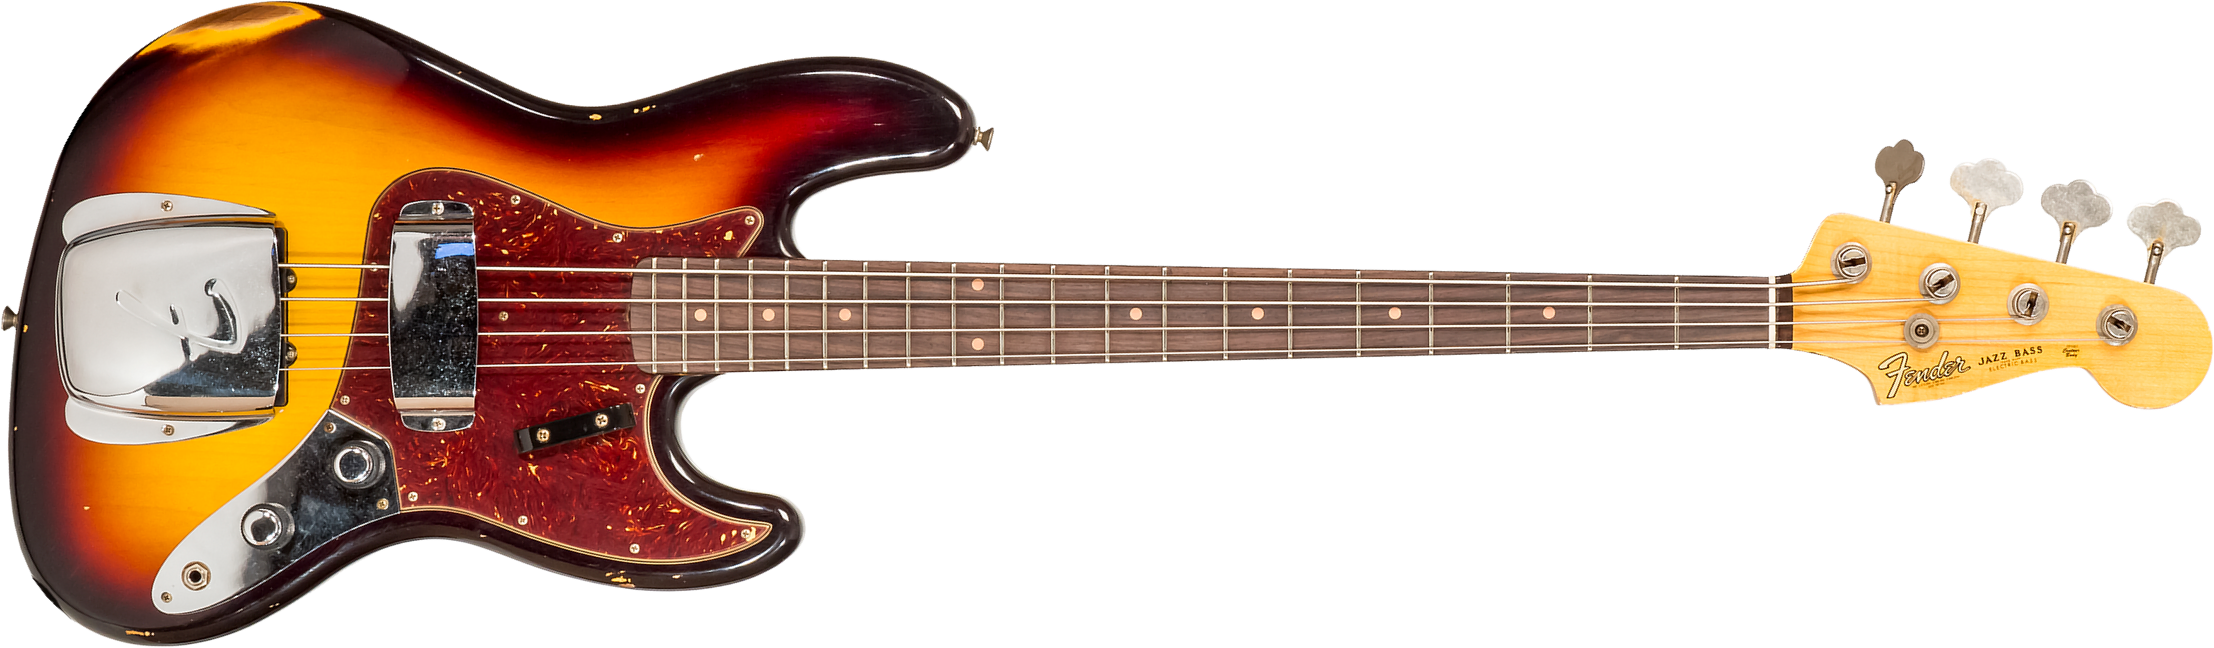 Fender Custom Shop  Jazz Bass 1962 Rw #cz569015 - Relic 3-color Sunburst - Solid body elektrische bas - Main picture